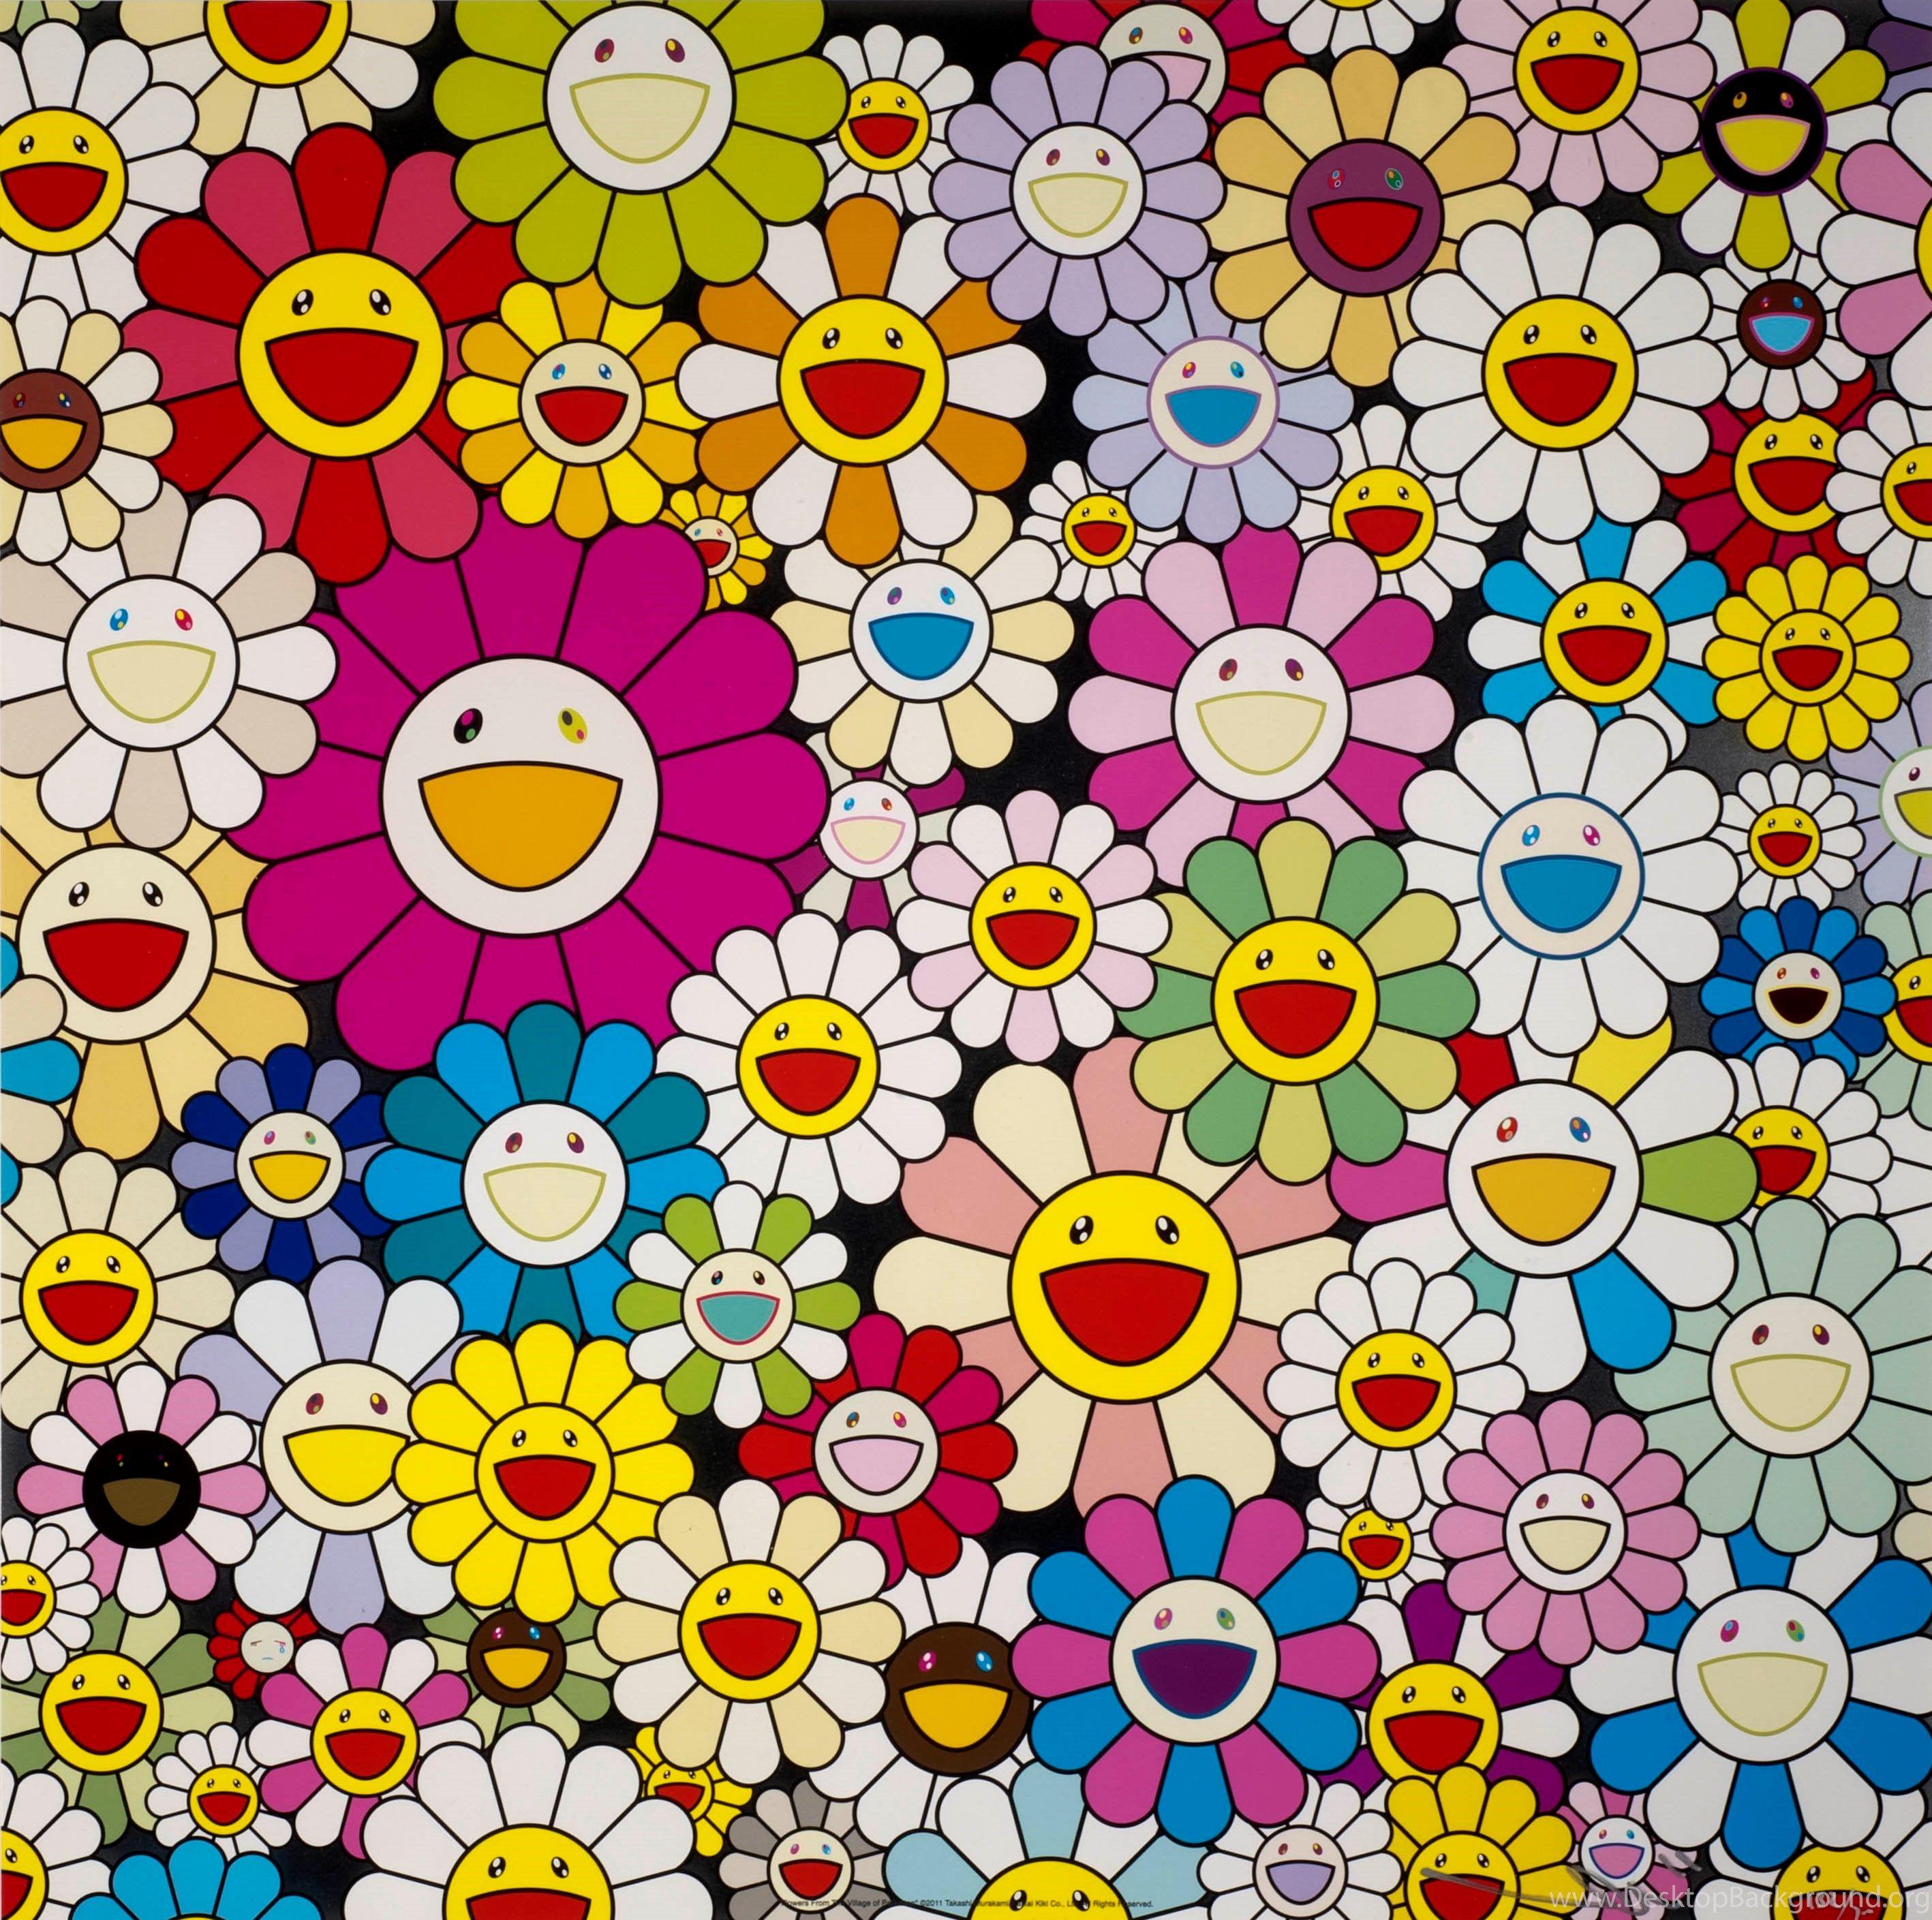 Reggaepsyc: Takashi Murakami Desktop Background